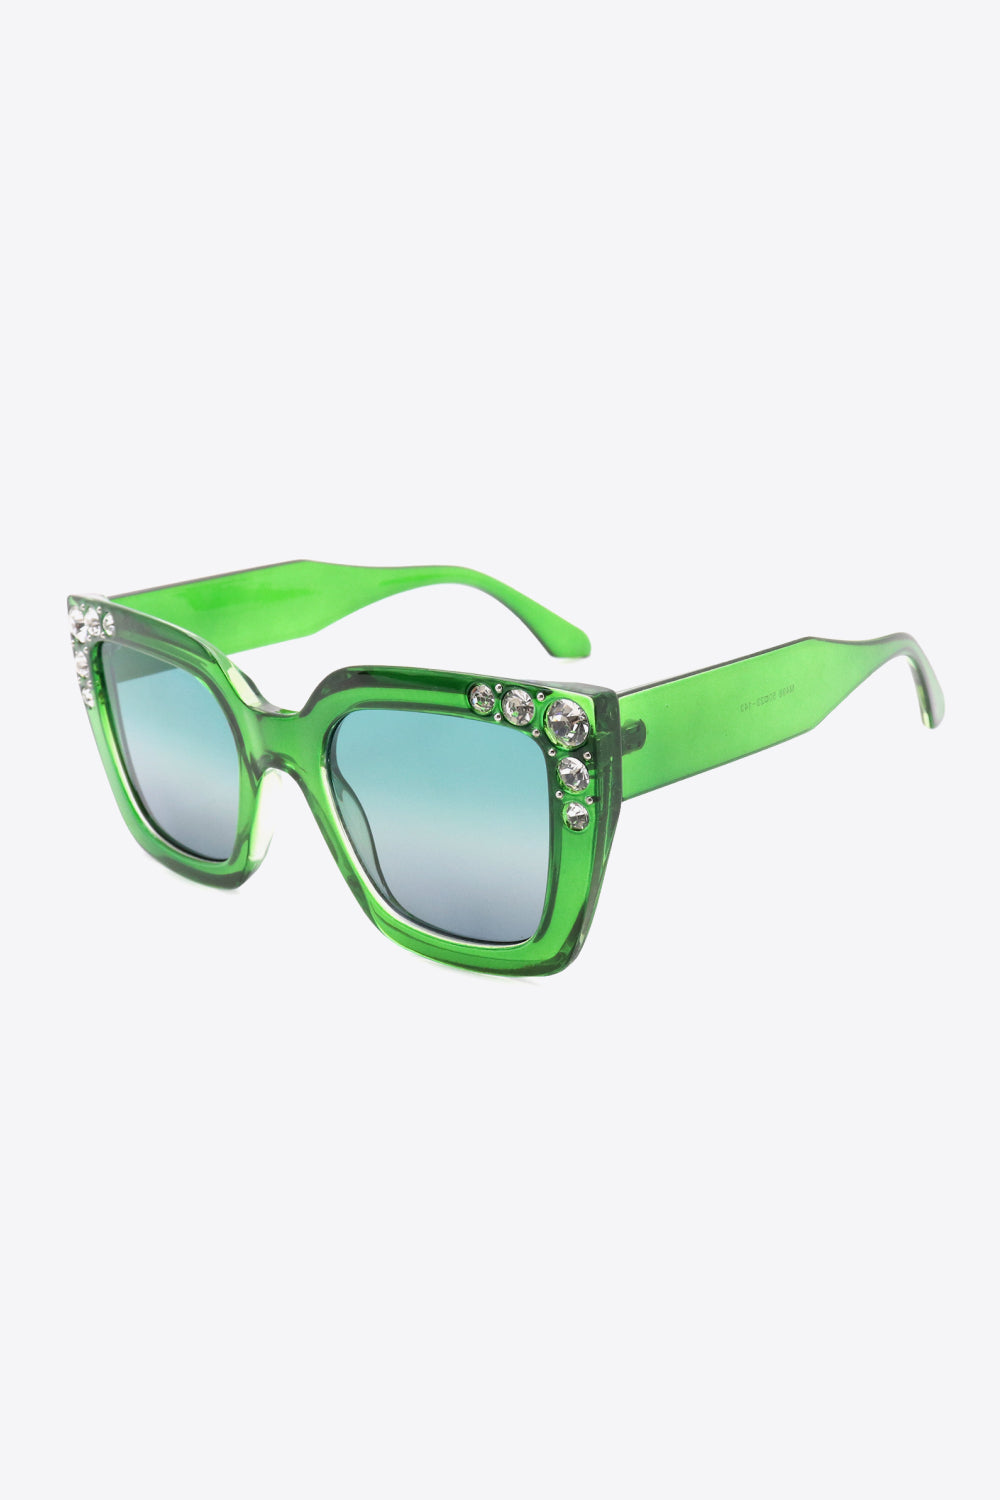 Glistening Glam Polycarbonate Sunglasses